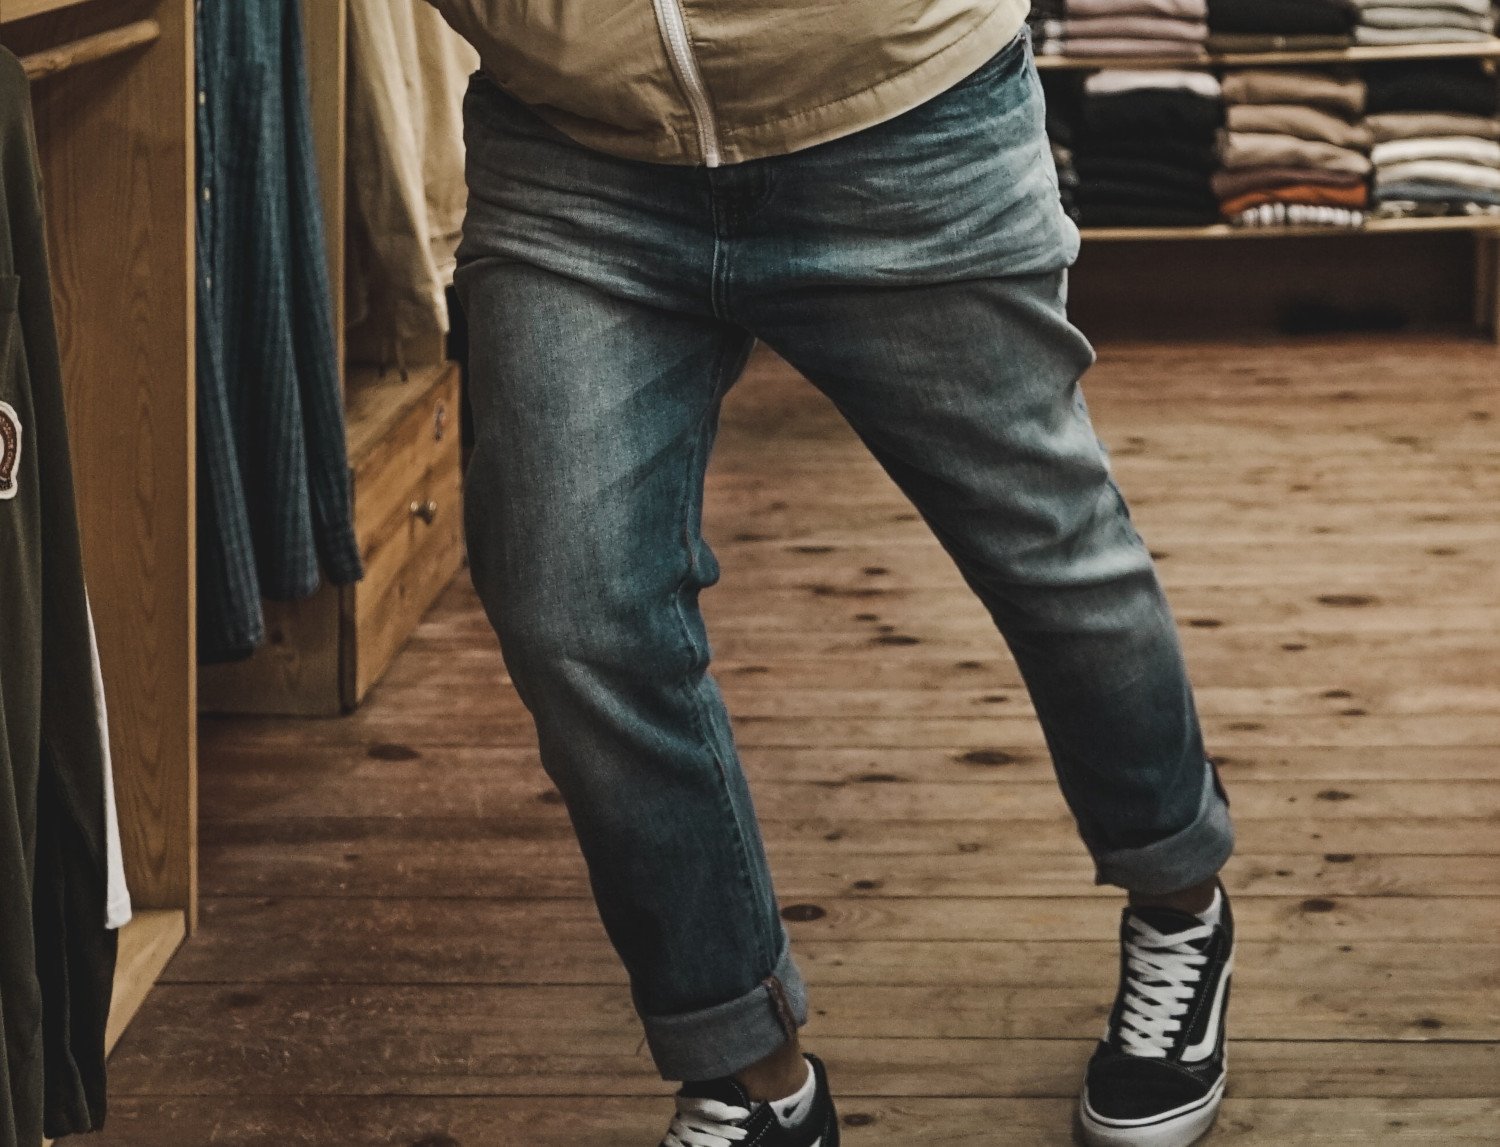 Buy galmajLj Stylish Men 's Pants,Men Fashion Jeans Drawstring Slim Fit Denim  Ankle Length Jogging Casual Pants - Dark Blue L at Amazon.in